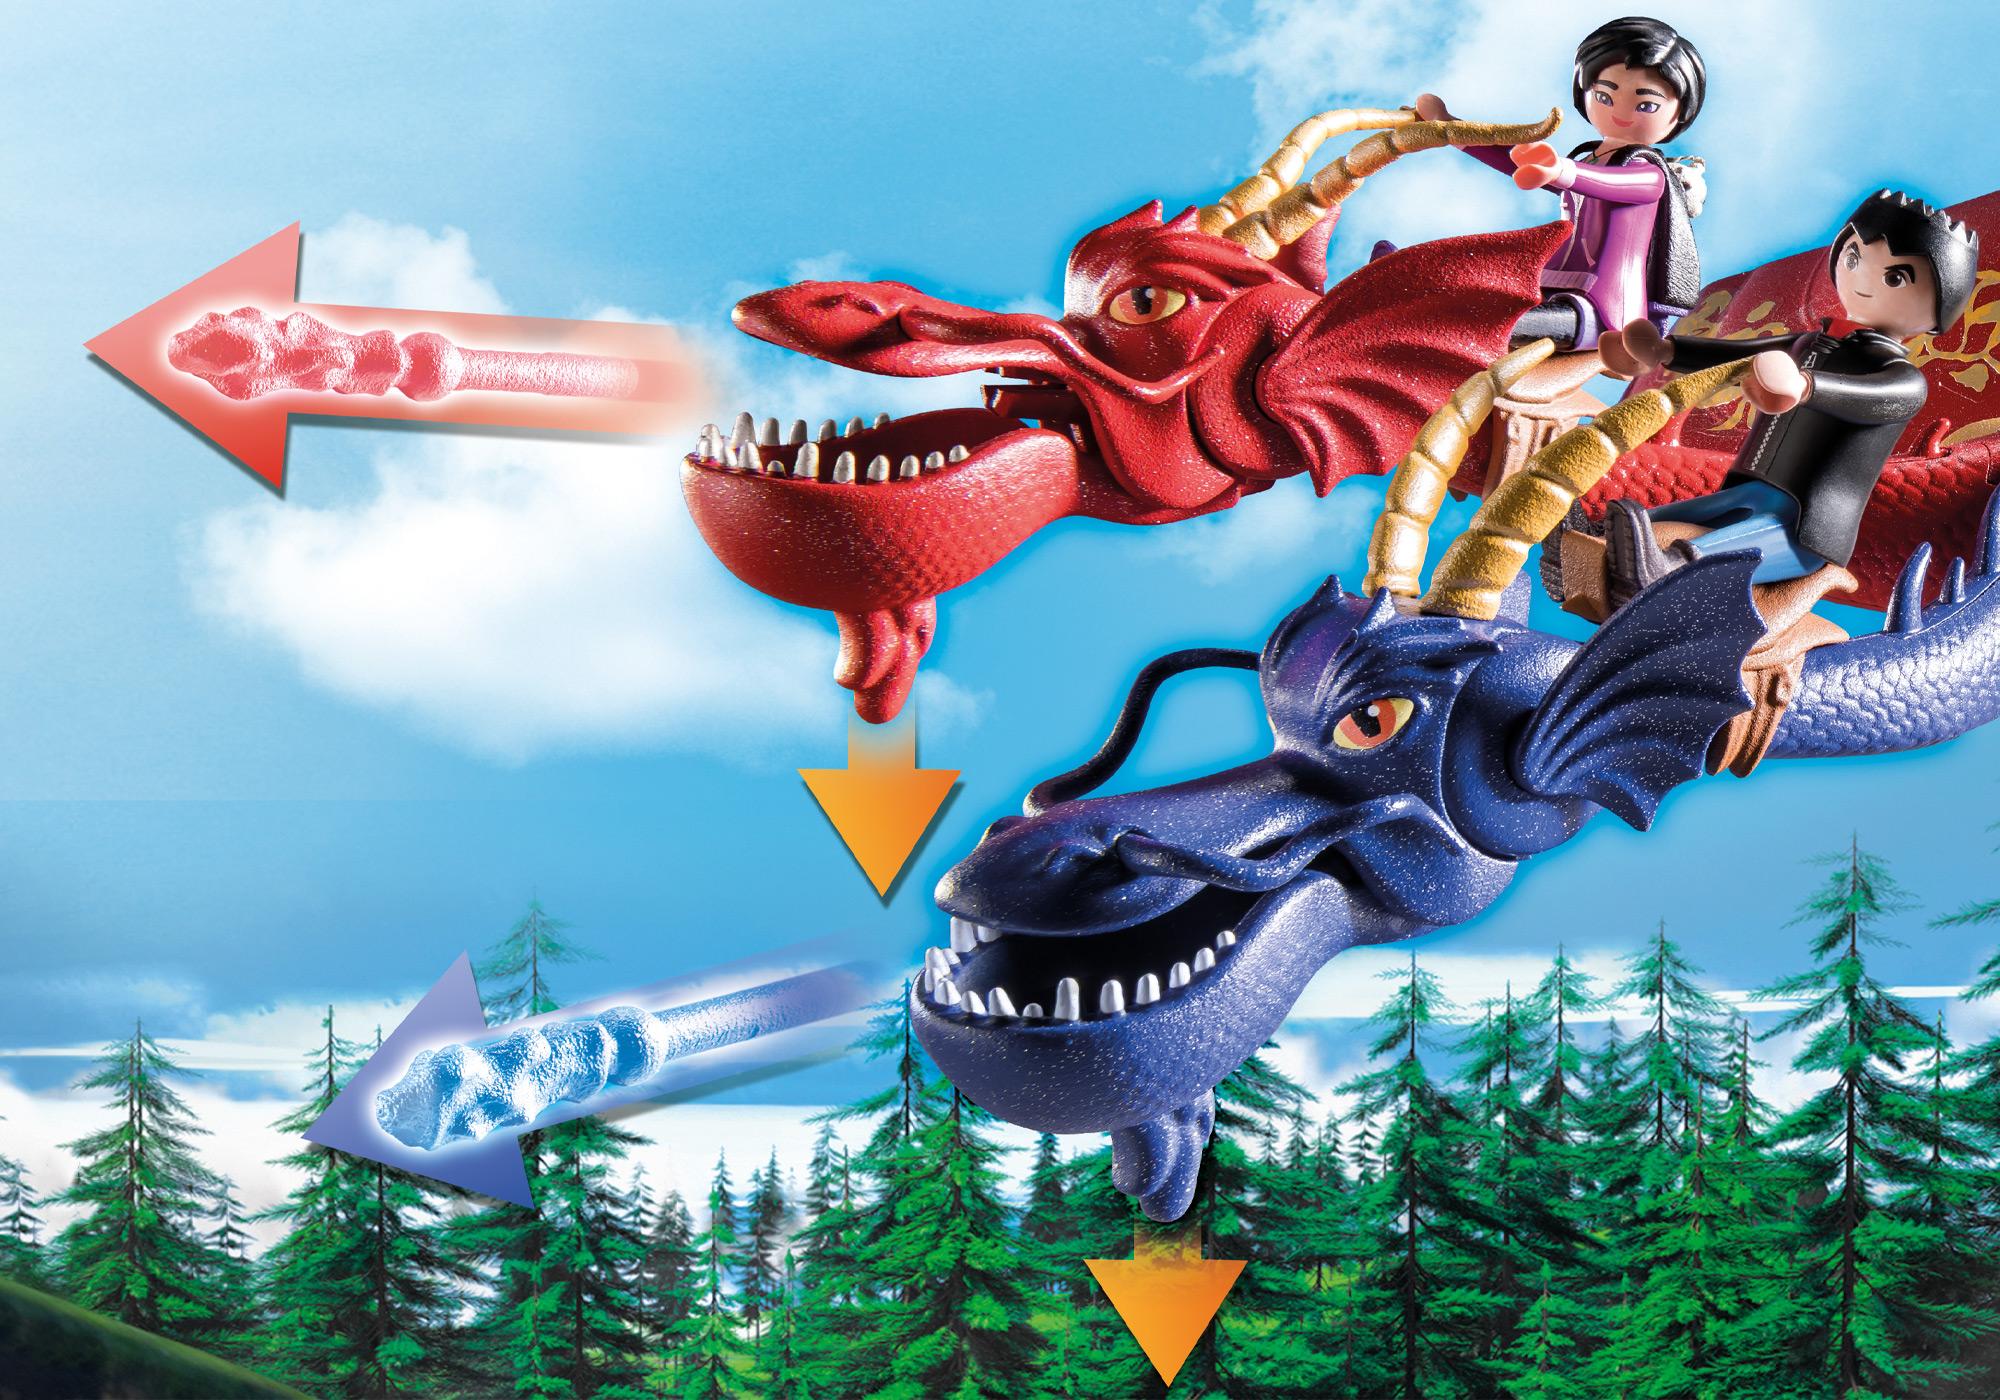 Introducing Playmobil Dragons Range - Serenity You